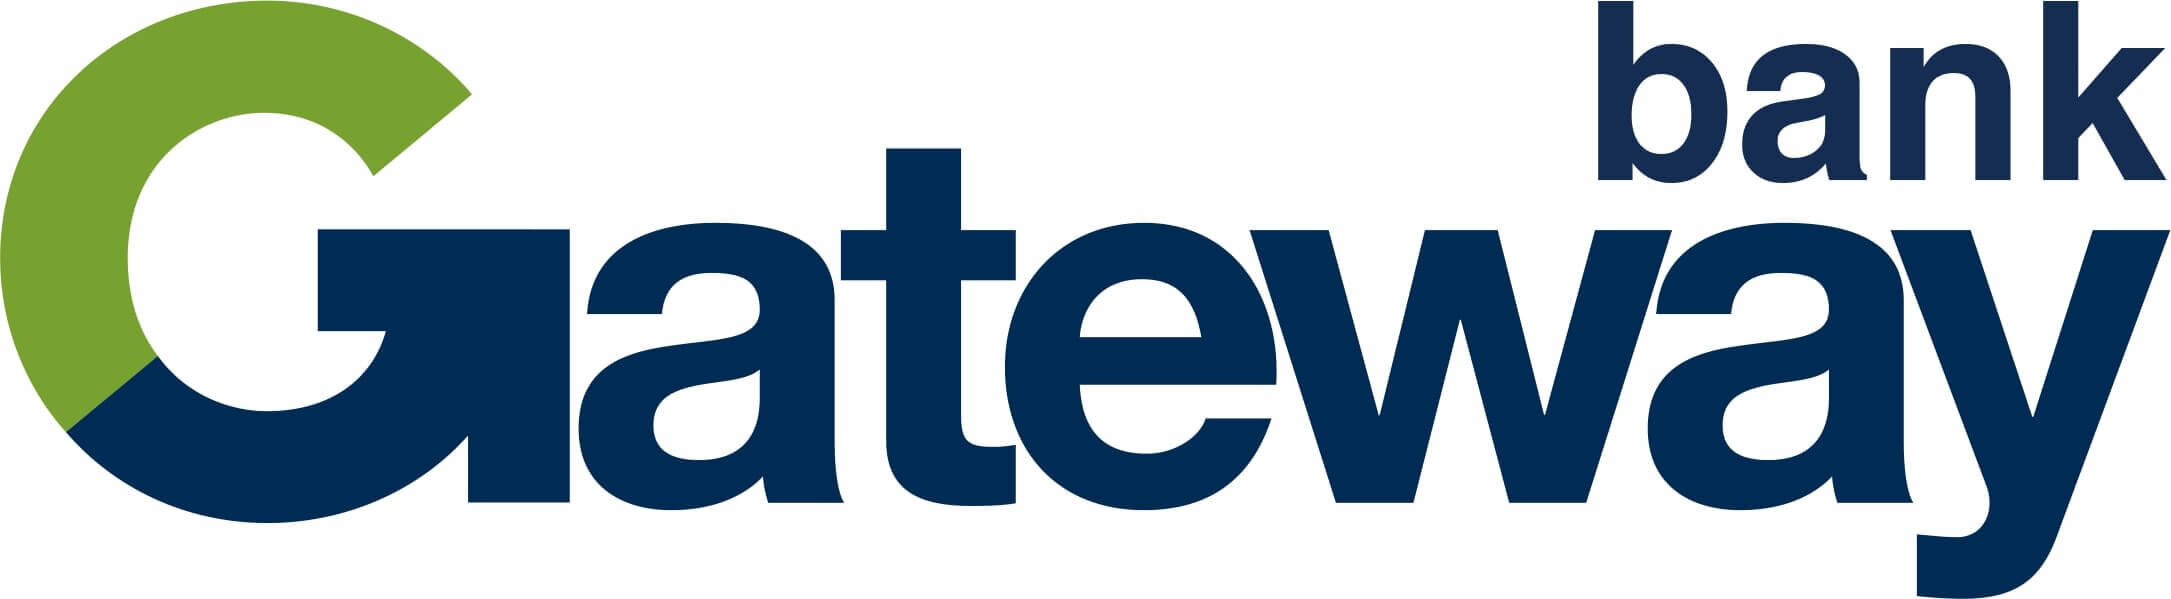 Gateway Bank - Logo.jpg